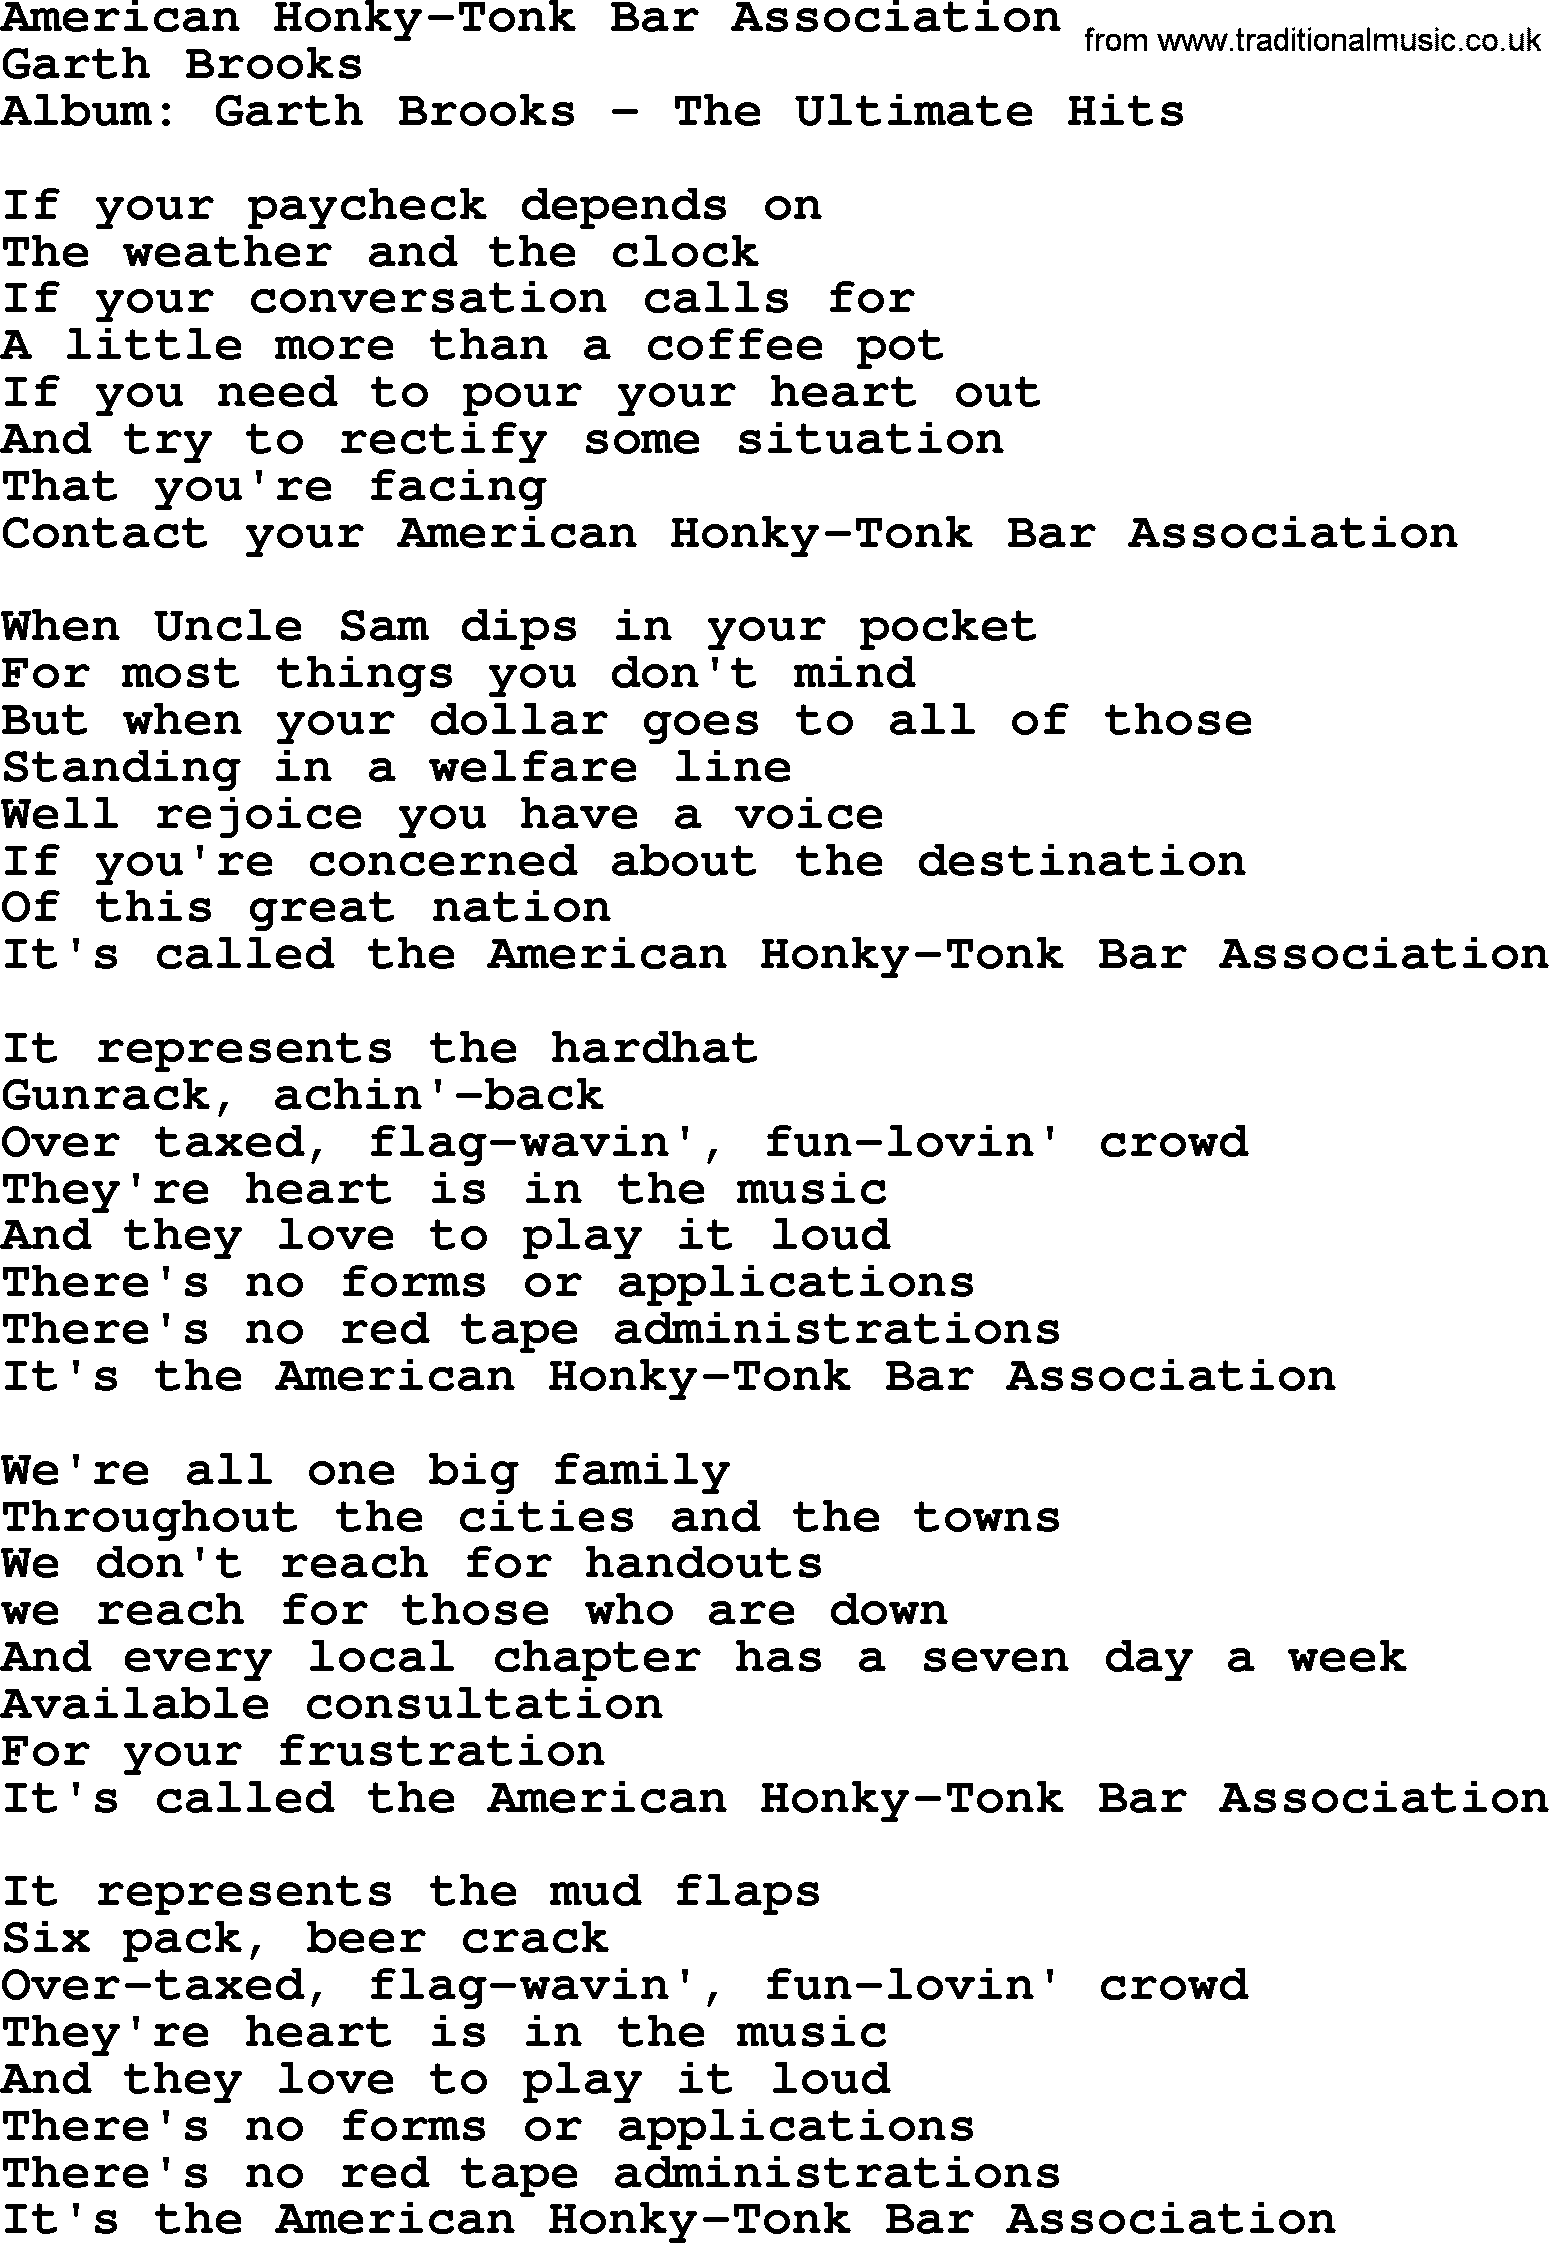 Garth Brooks song: American Honky-tonk Bar Association, lyrics